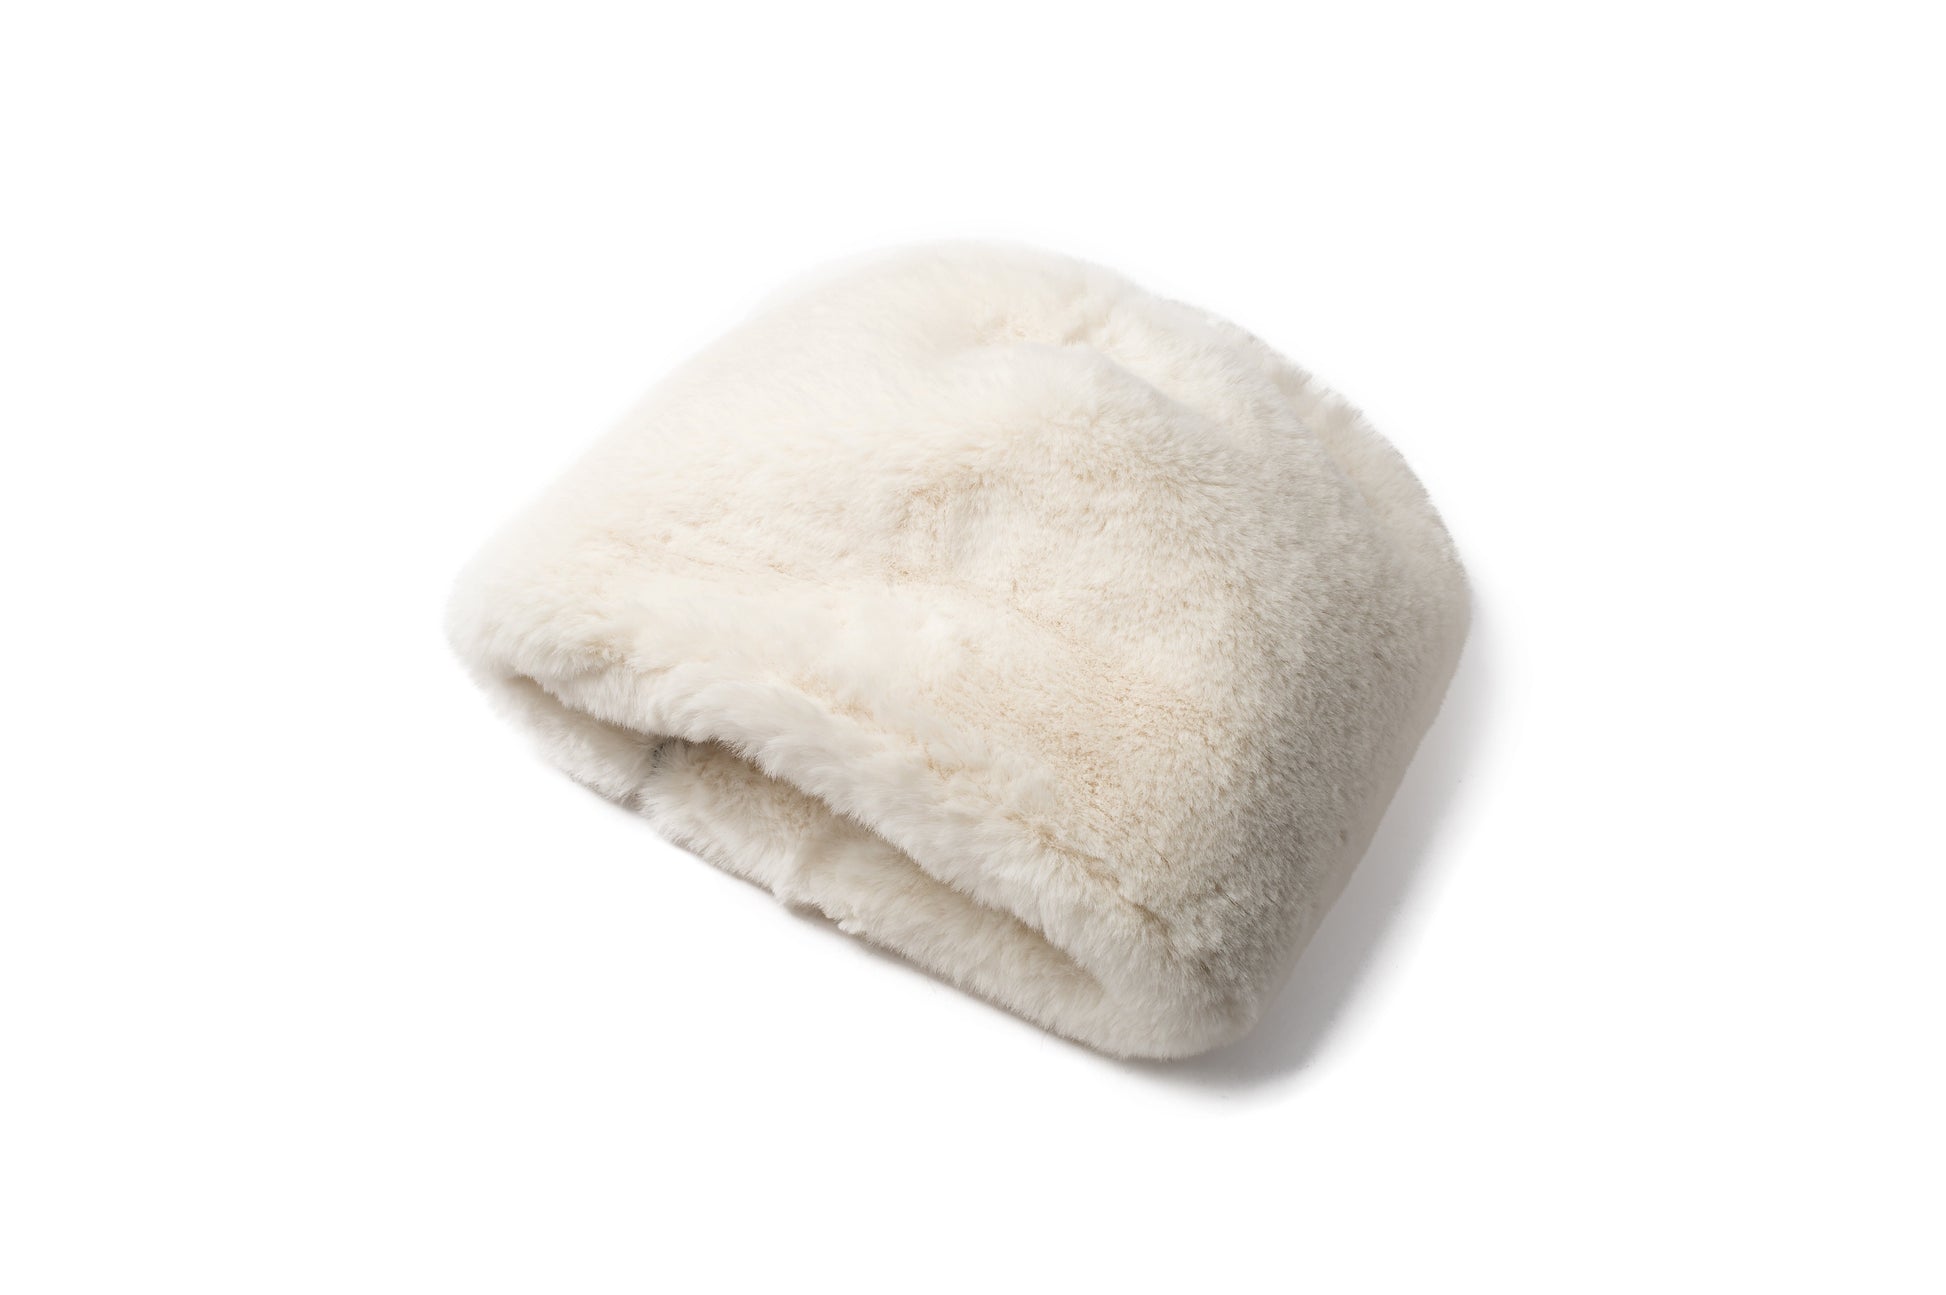 Oversized, slouchy faux fur hat in Cream